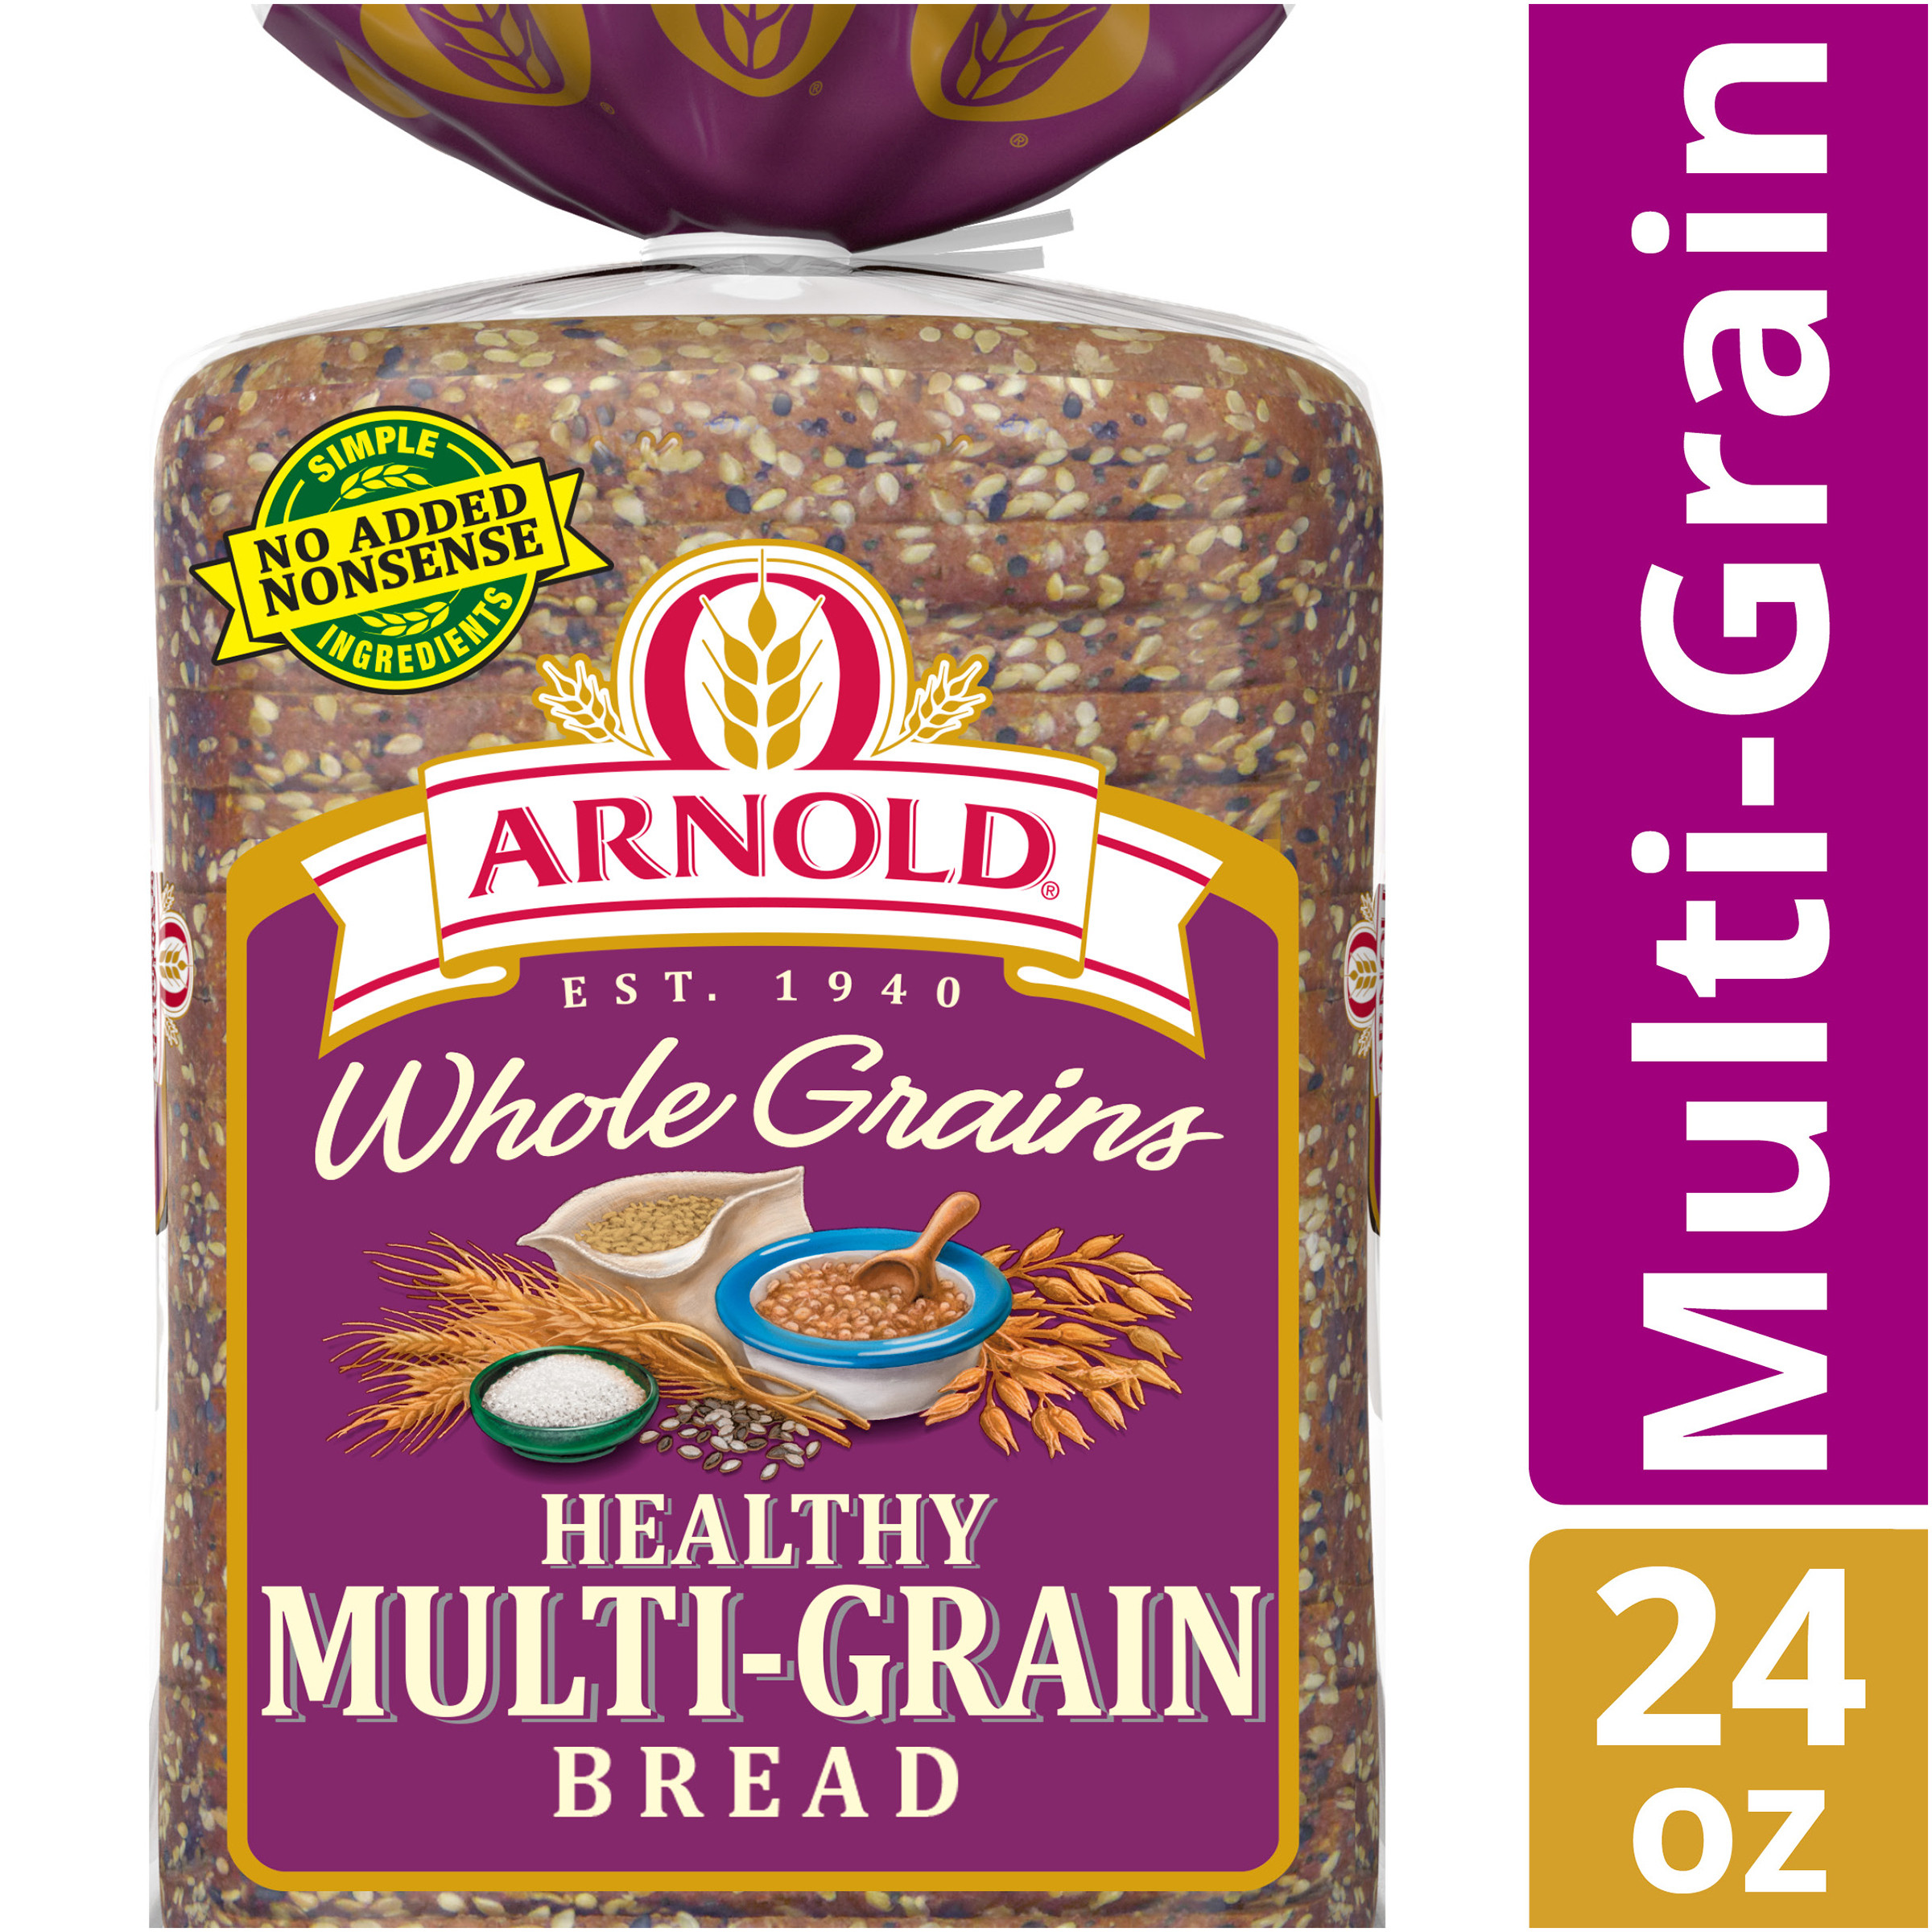 Healthiest Whole Grain Bread
 Arnold Whole Grains Healthy Multi Grain Bread Baked with